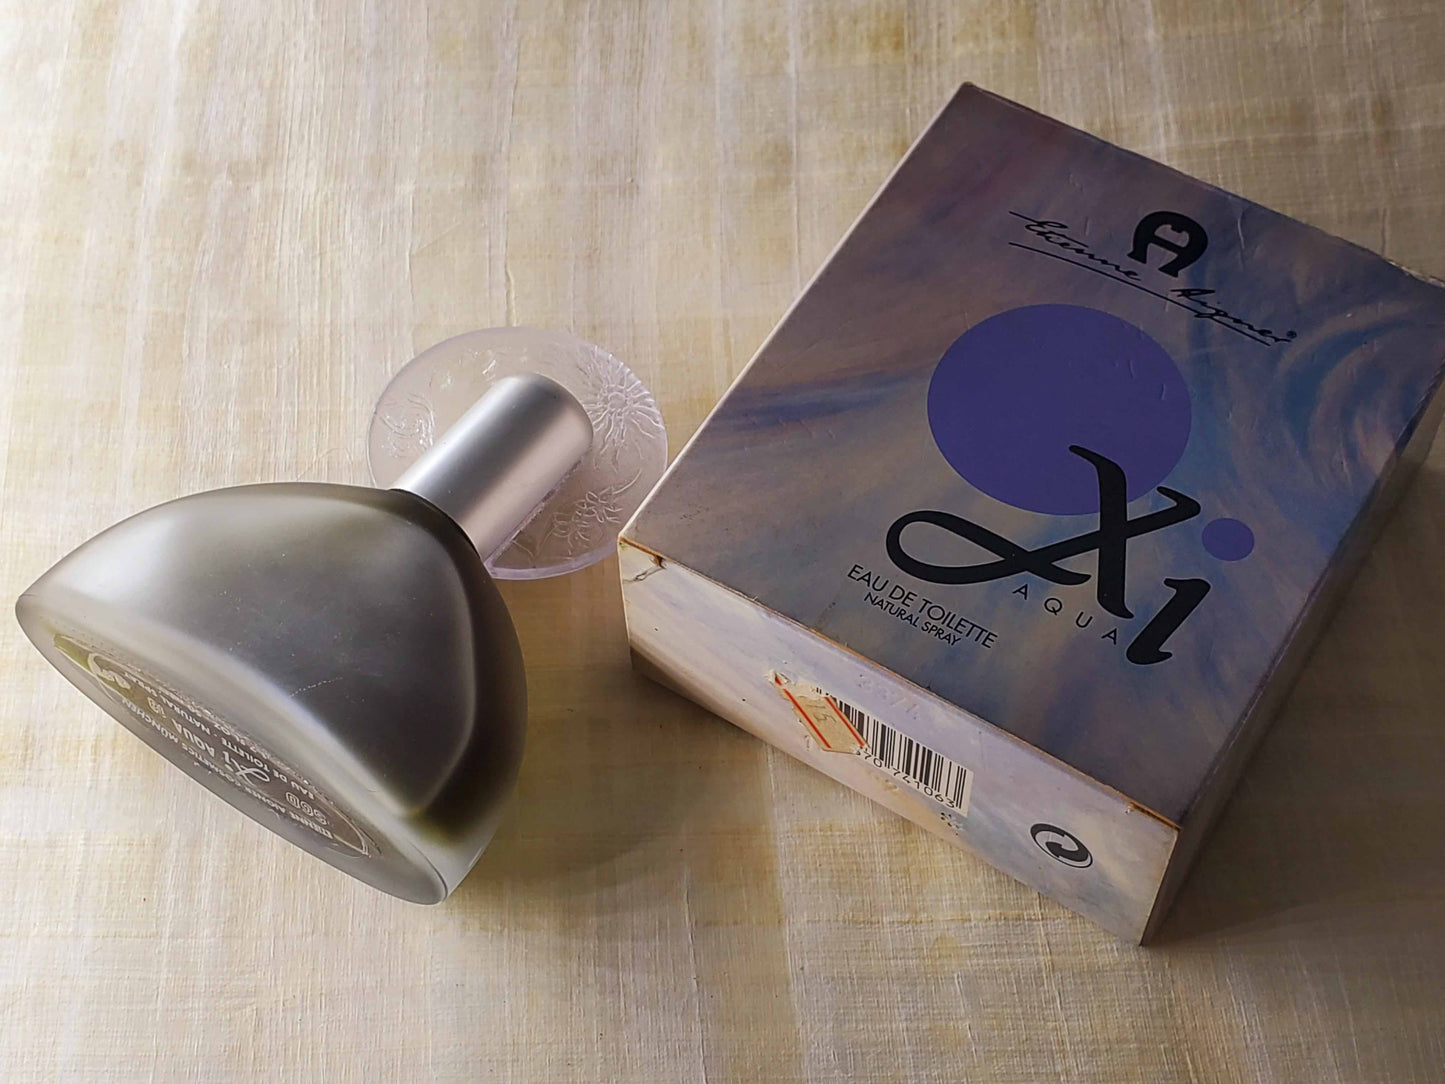 Xi Aqua Etienne Aigner for Women EDT Spray 50 ml 1.7 oz, Rare, Vintage